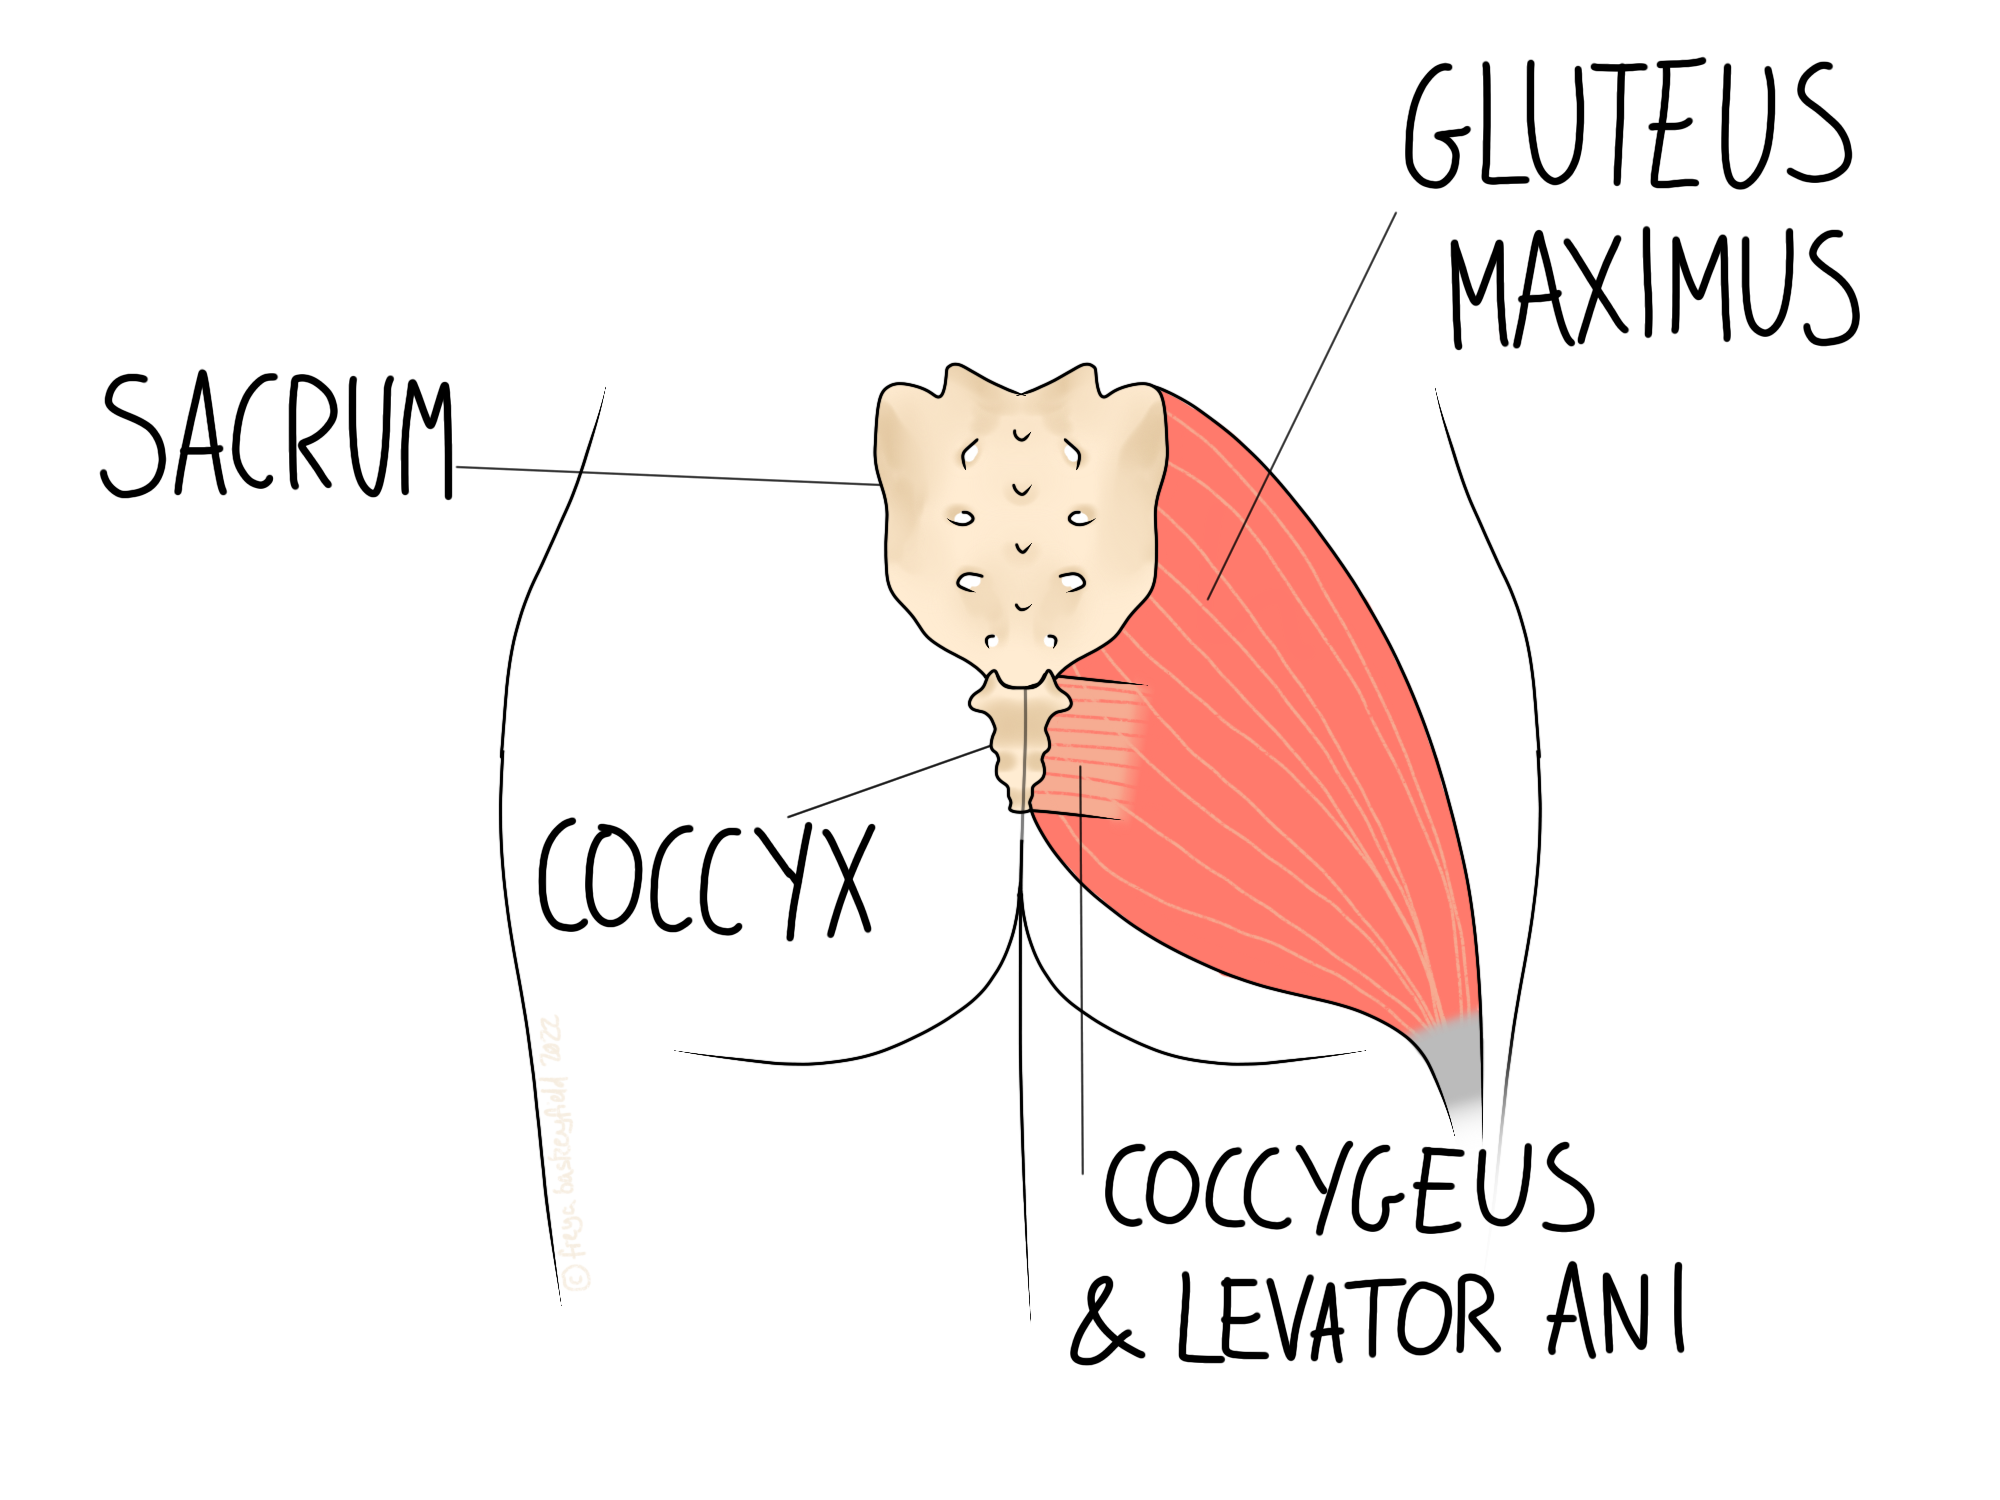 Coccyx Pain, Coccydynia & Tailbone Pain Treatment